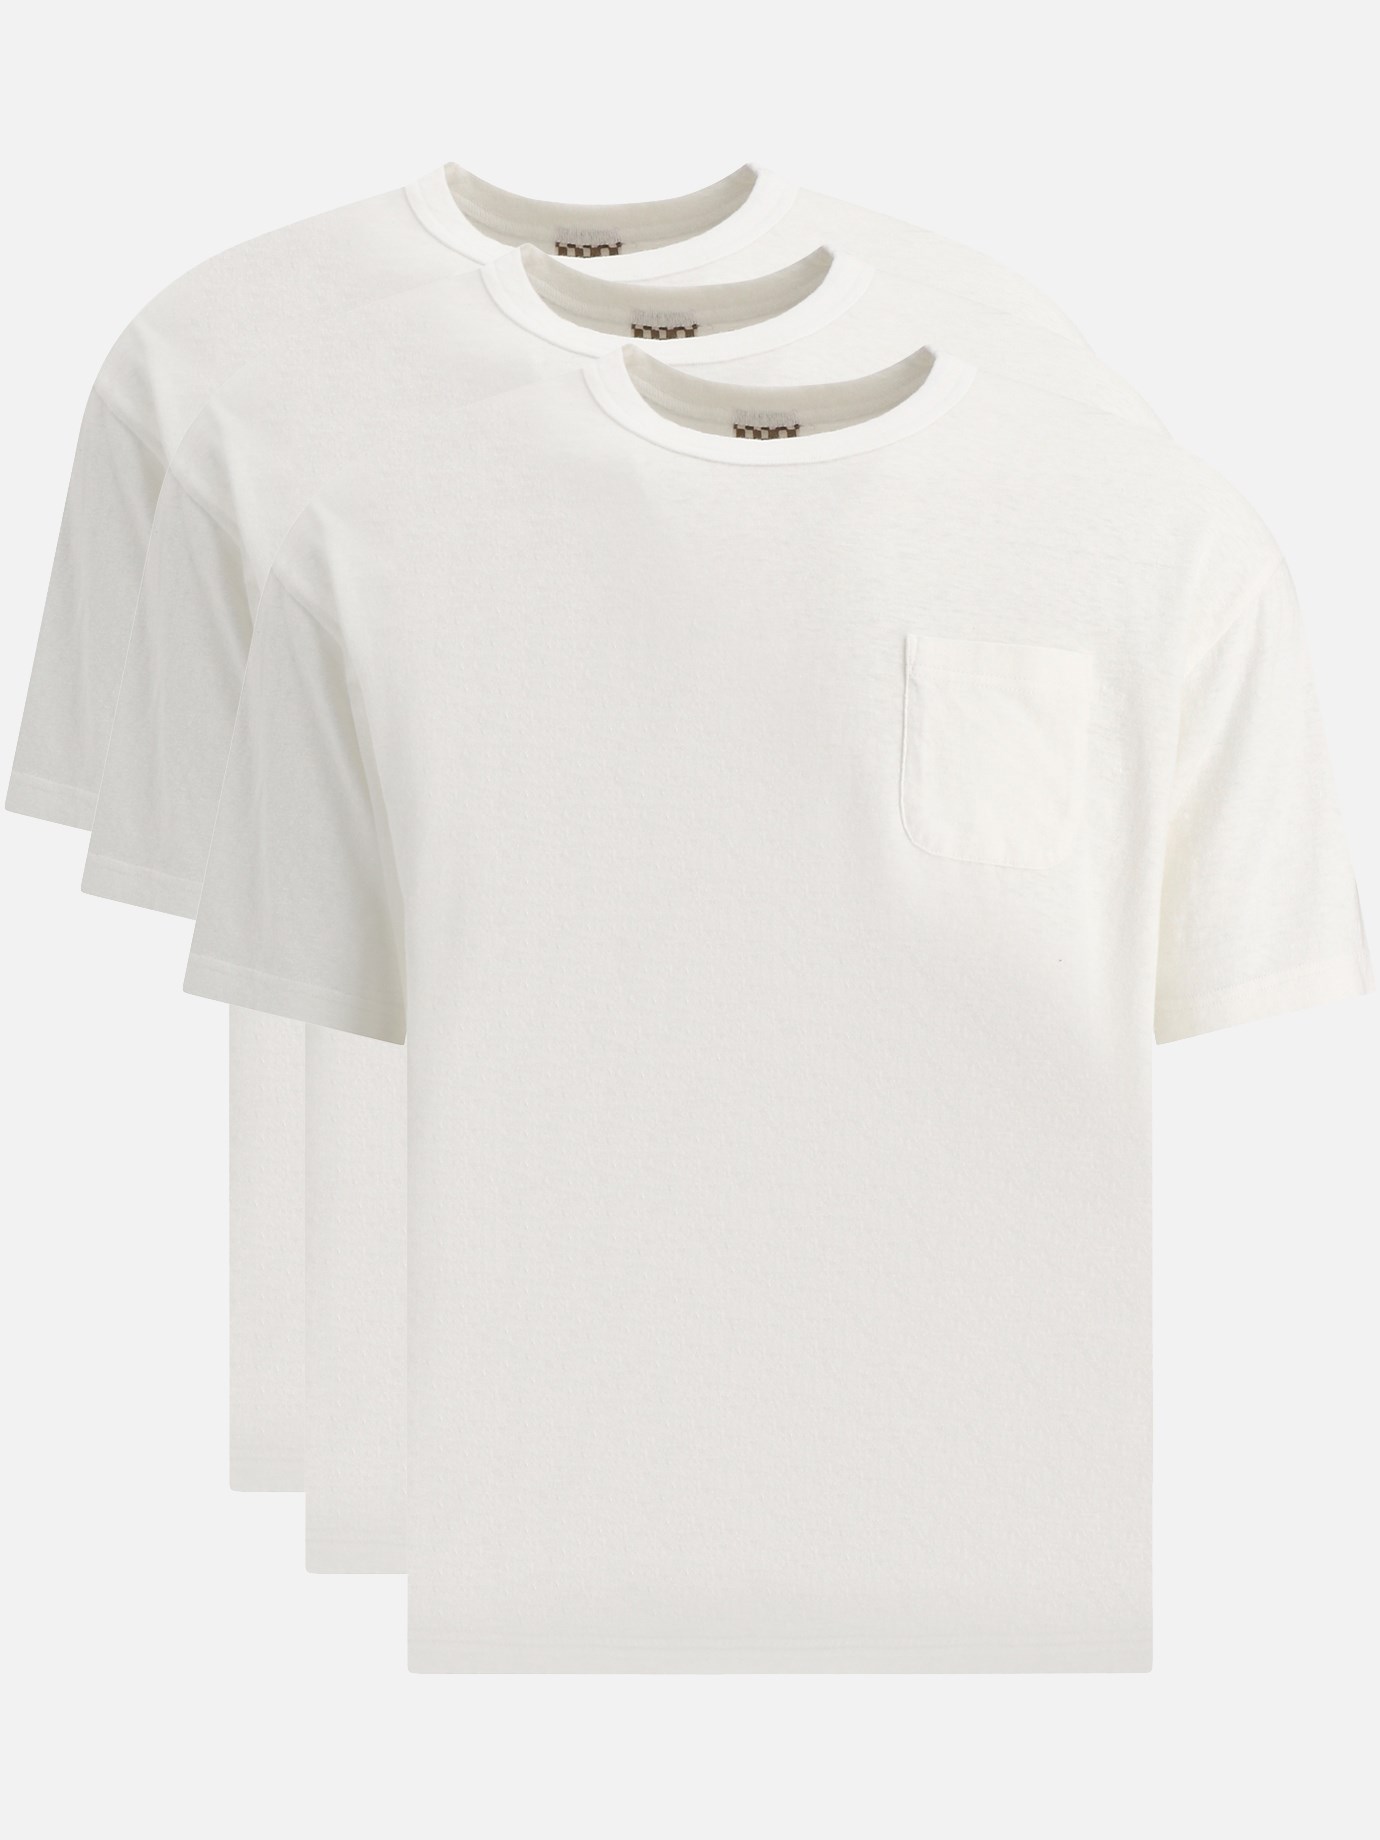 Chest pocket t-shirt set